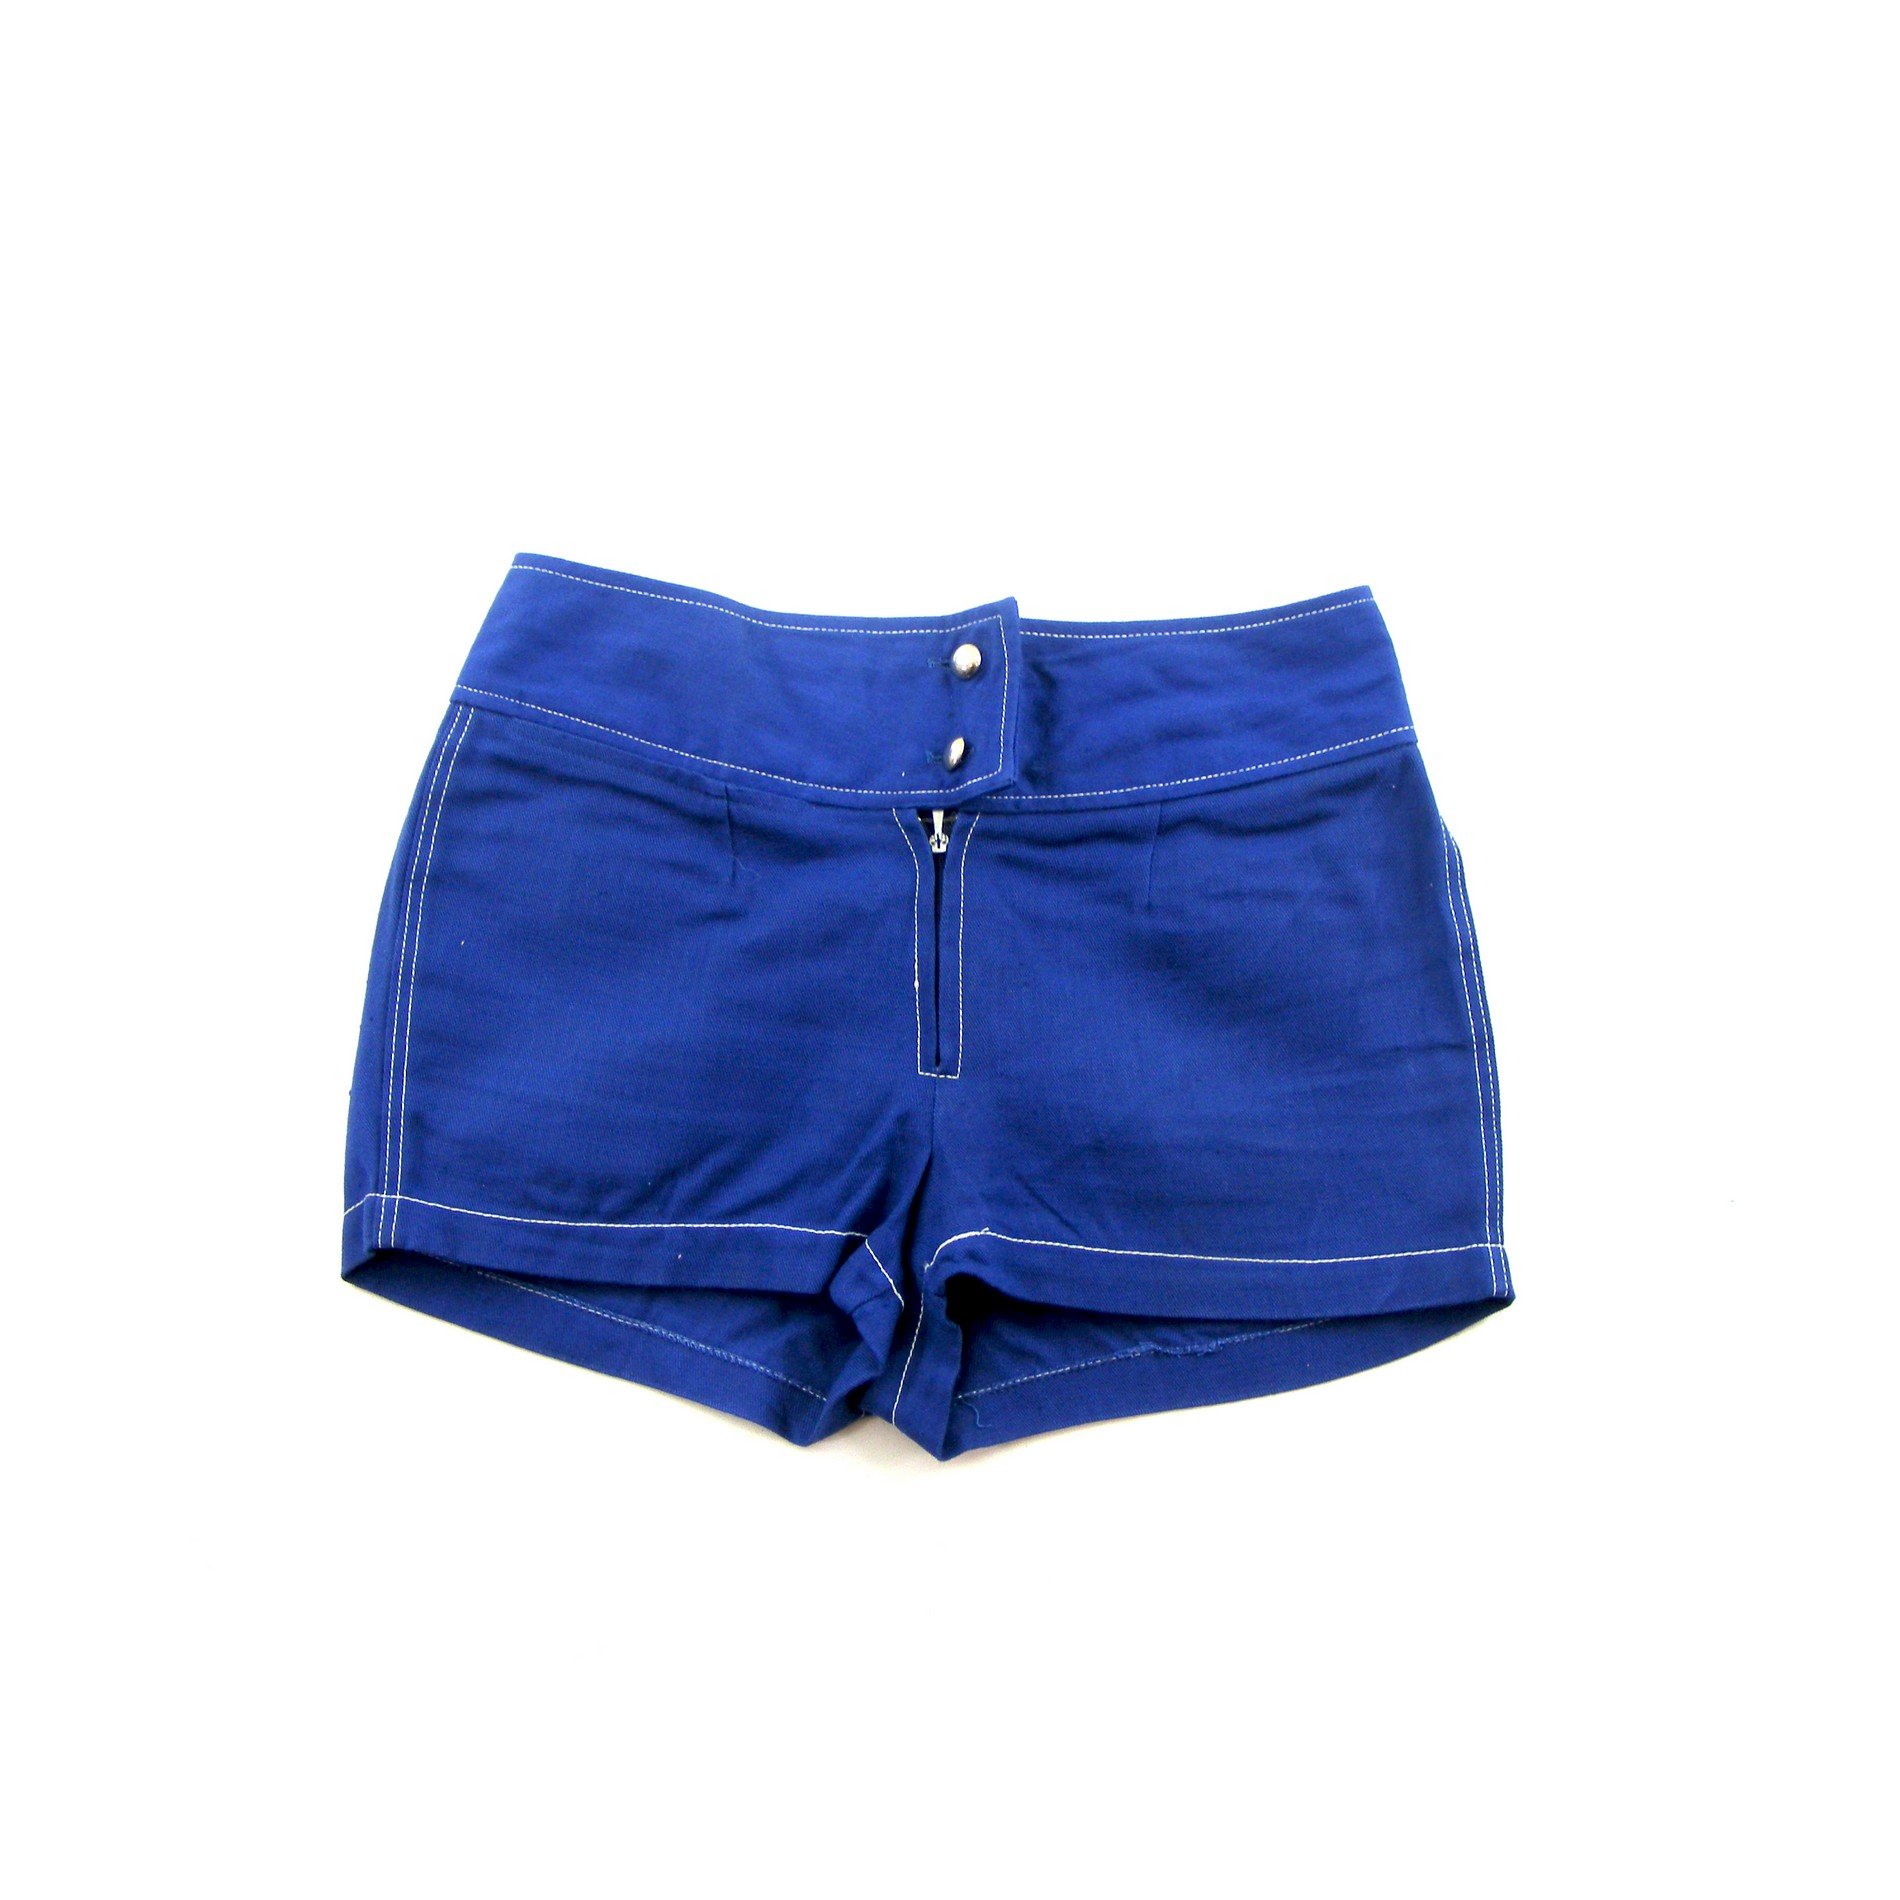 50s swimming shorts - 6 - Blue 17 Vintage Clothing